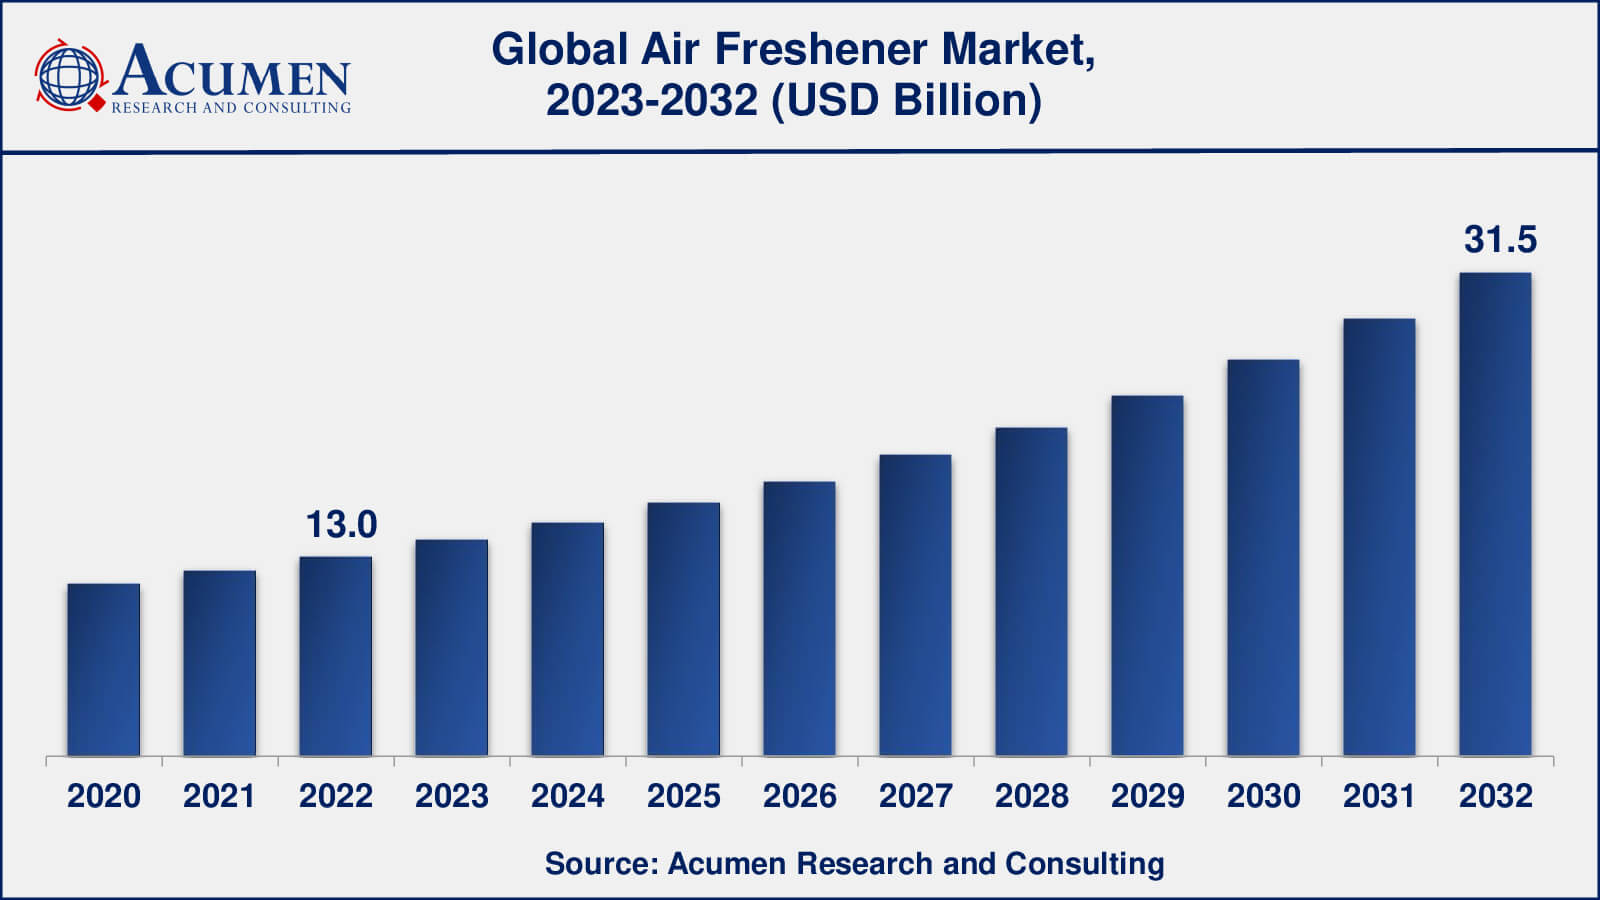 Global Air Freshener Market Dynamics